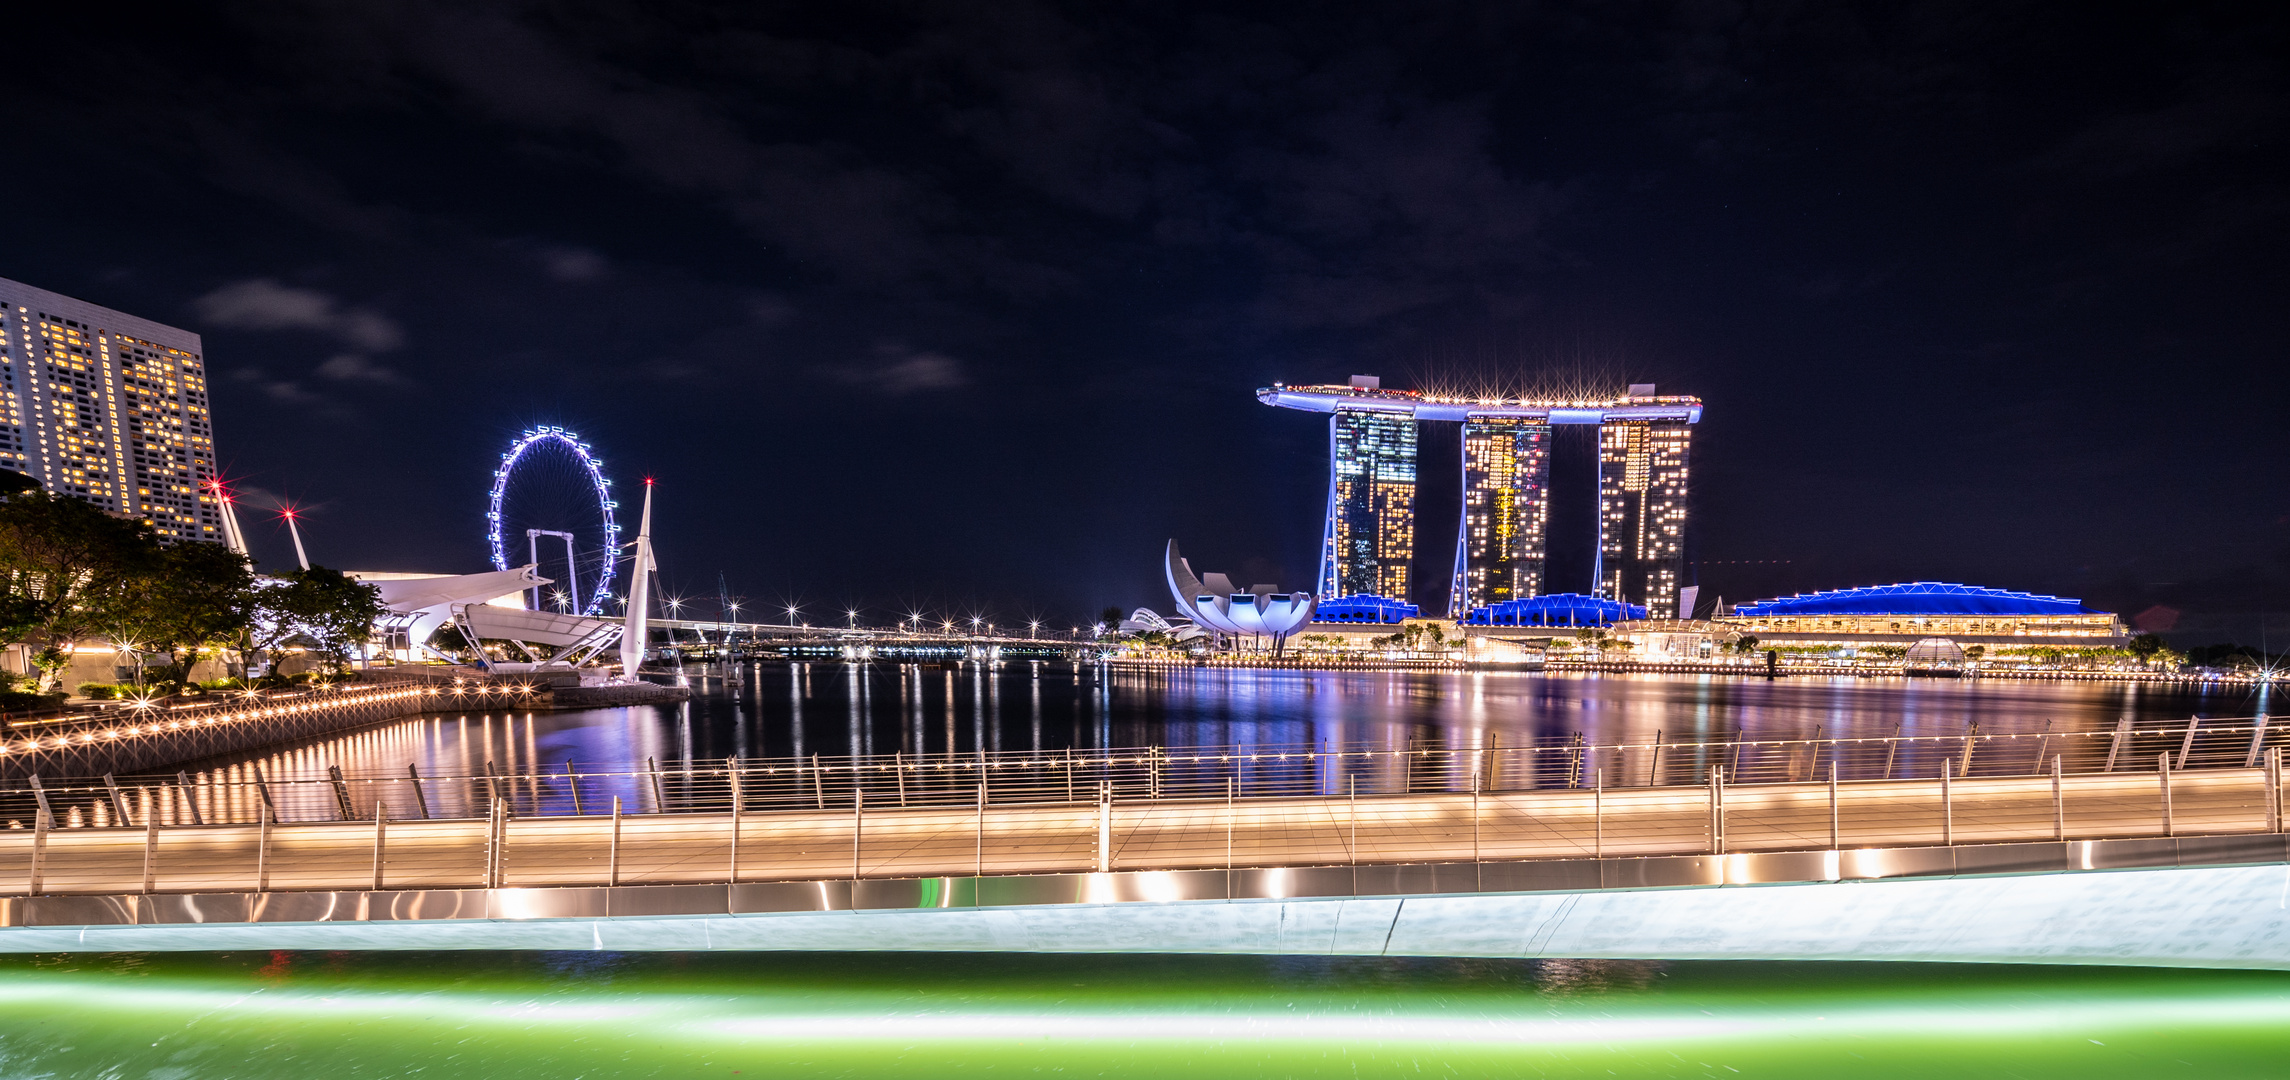 Marina Bay Sands, Singapore Flyer, ArtScience Museum at night